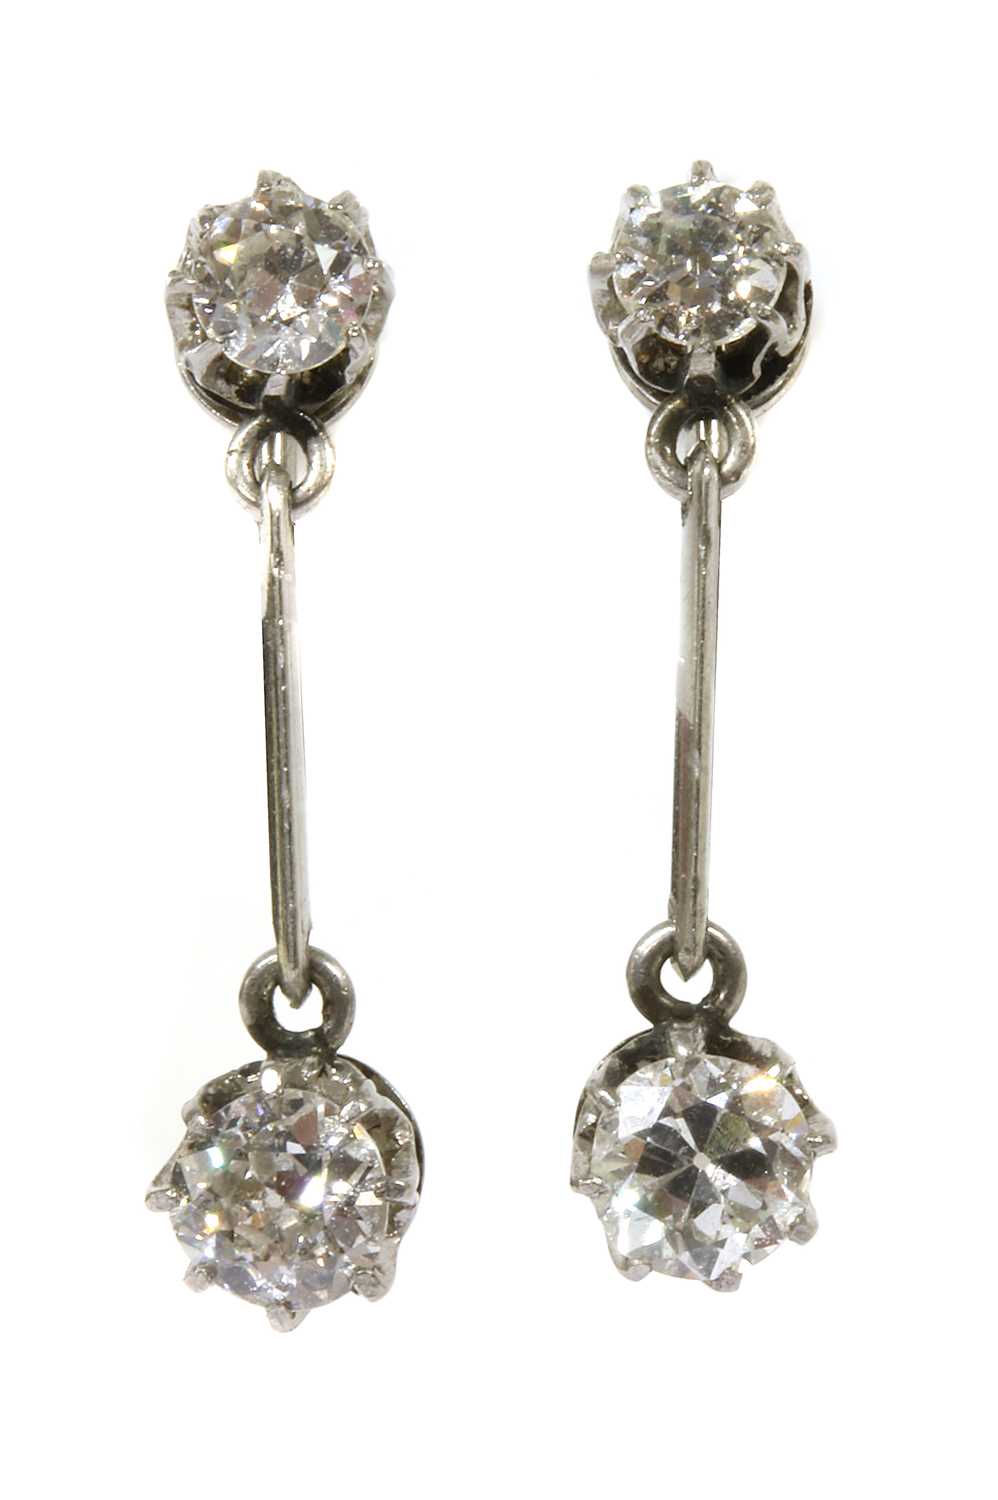 Lot 12 - A pair of early 20th century diamond drop earrings